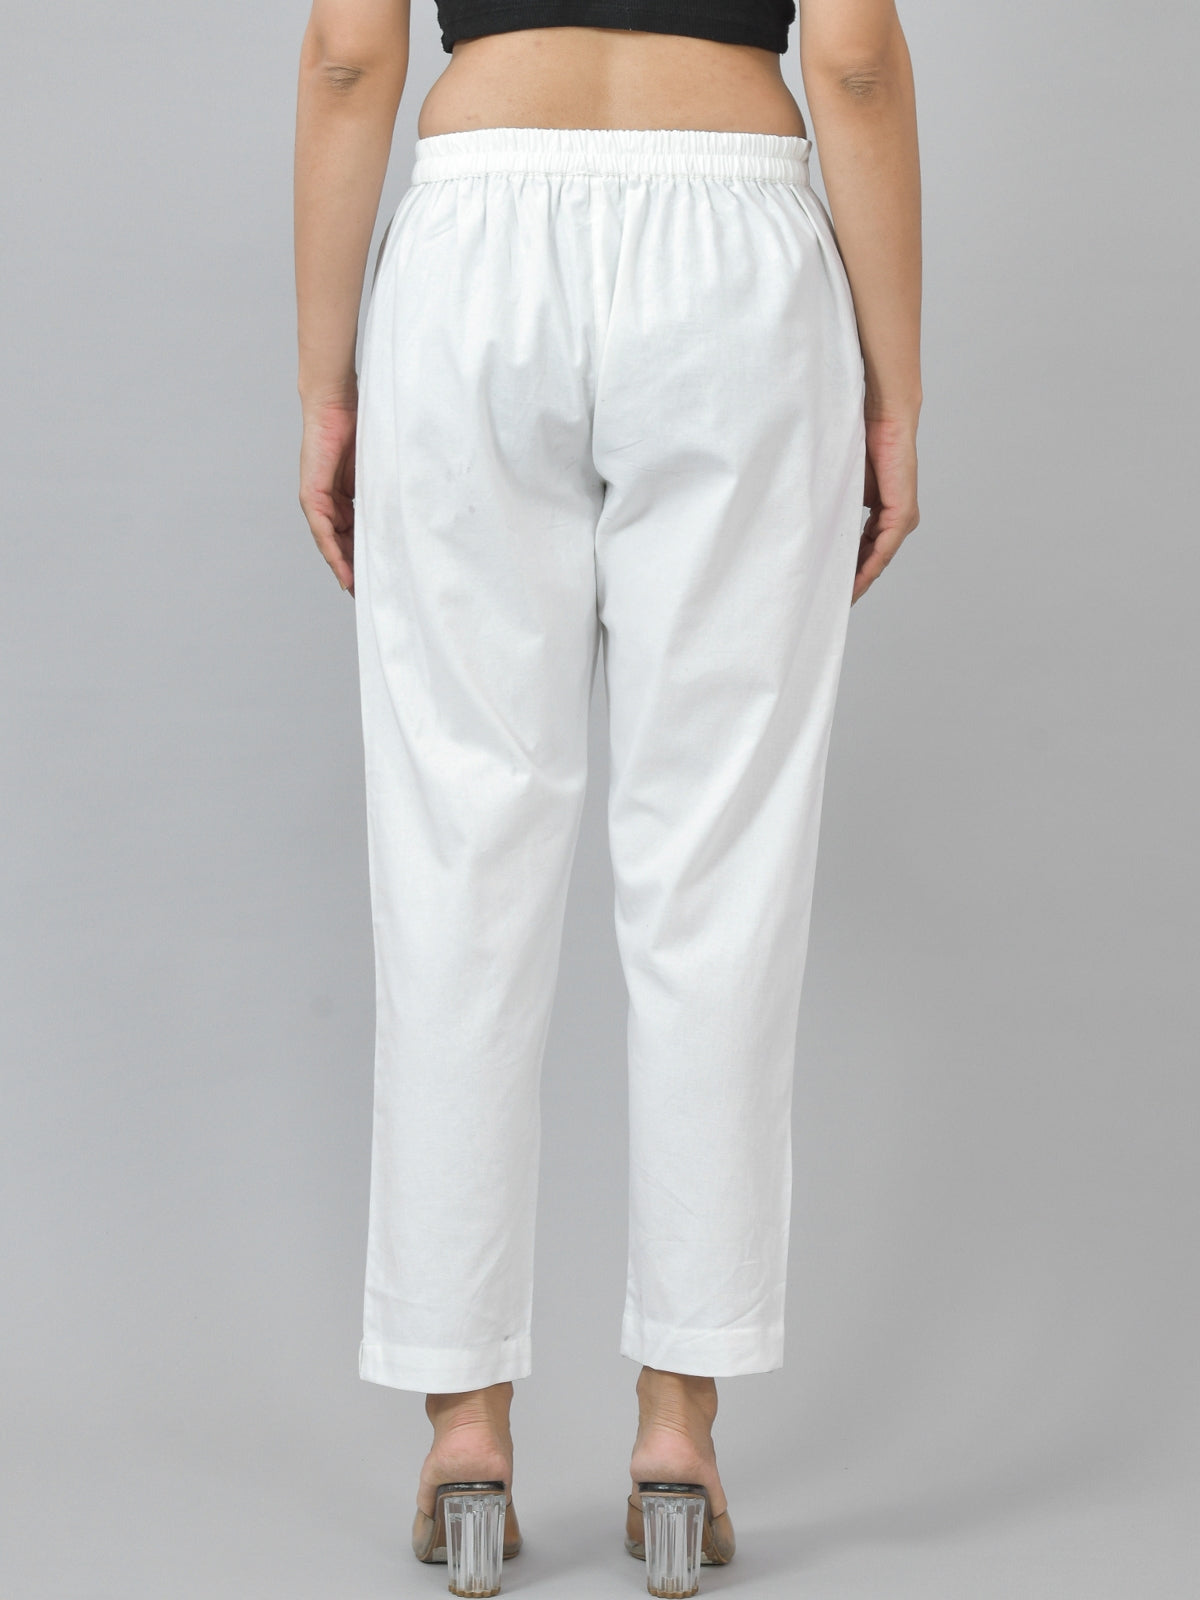 Women Regular Fit Deep Pocket Solid White Half Elastic Cotton Pants